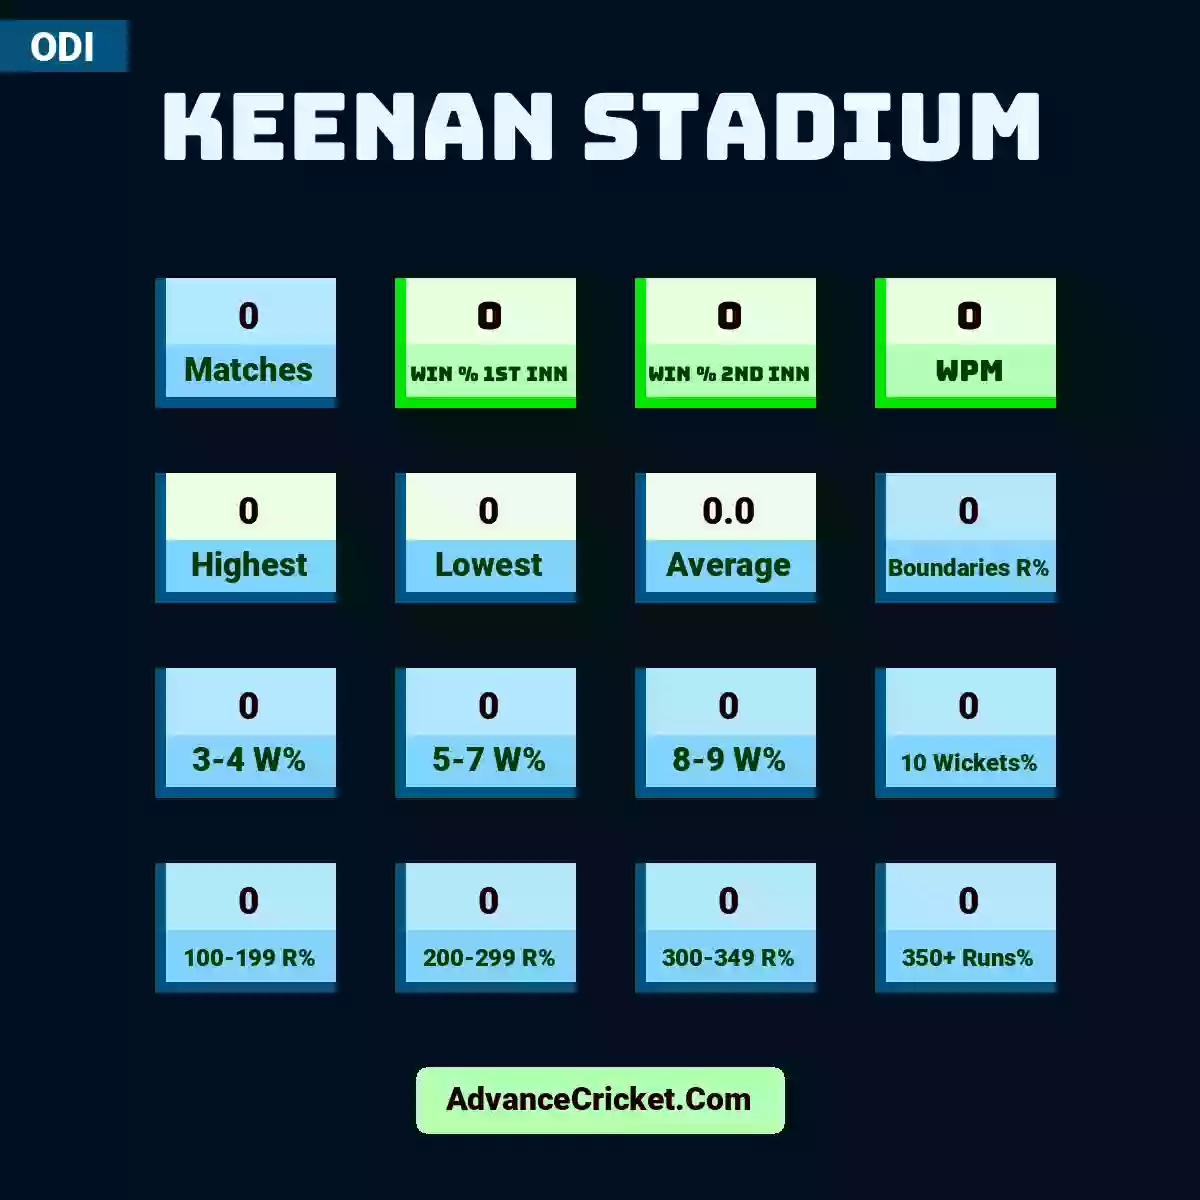 Image showing Keenan Stadium with Matches: 0, Win % 1st Inn: 0, Win % 2nd Inn: 0, WPM: 0, Highest: 0, Lowest: 0, Average: 0.0, Boundaries R%: 0, 3-4 W%: 0, 5-7 W%: 0, 8-9 W%: 0, 10 Wickets%: 0, 100-199 R%: 0, 200-299 R%: 0, 300-349 R%: 0, 350+ Runs%: 0.